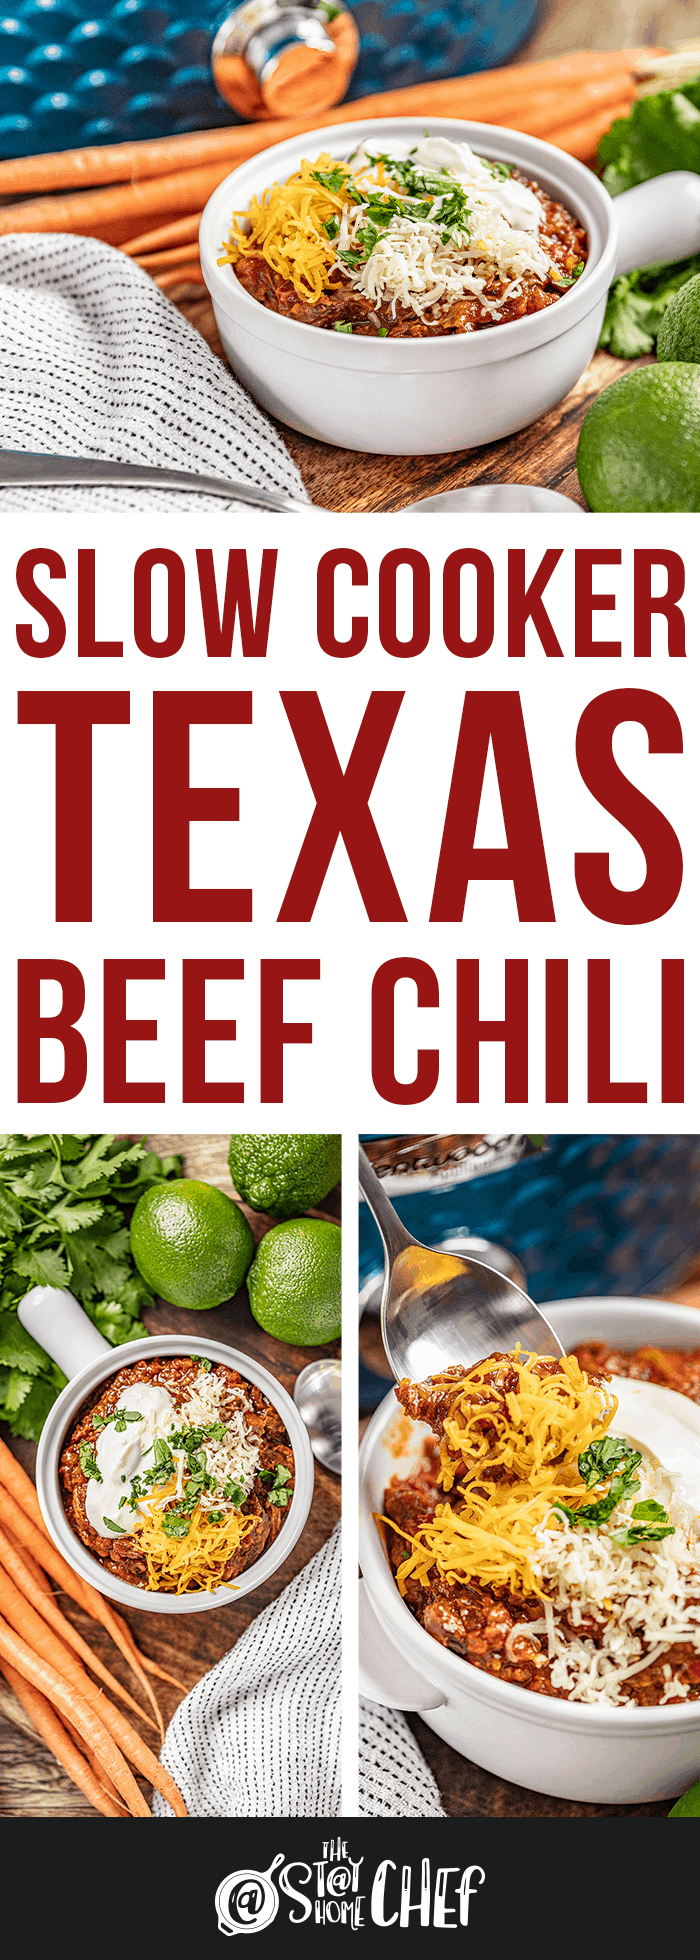 Slow Cooker Texas Beef Chili